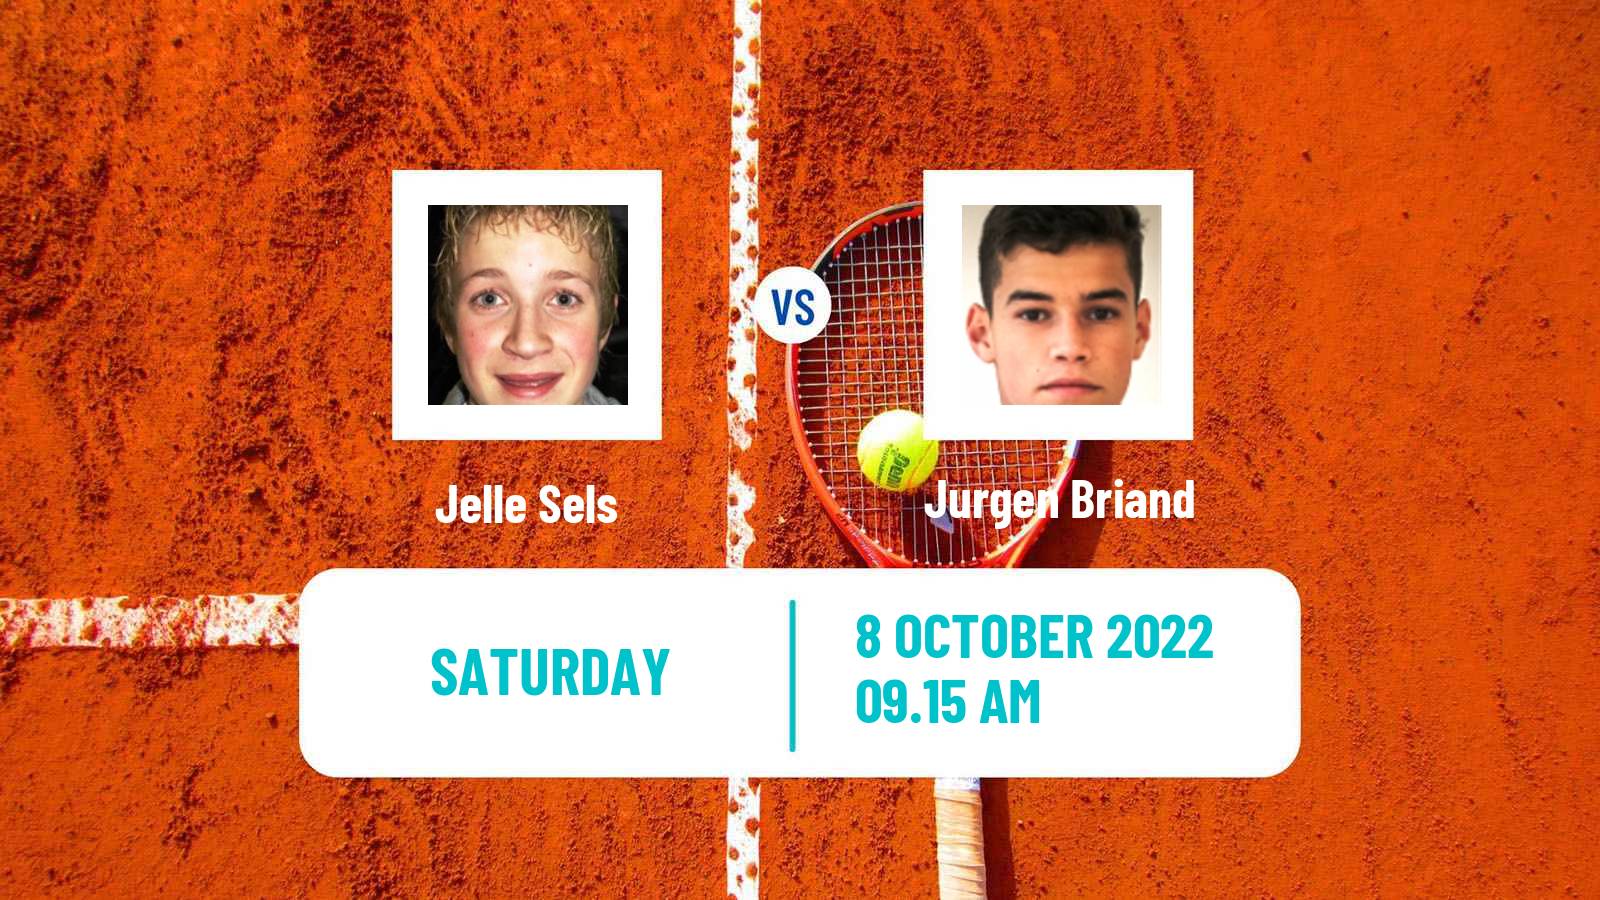 Tennis ATP Challenger Jelle Sels - Jurgen Briand